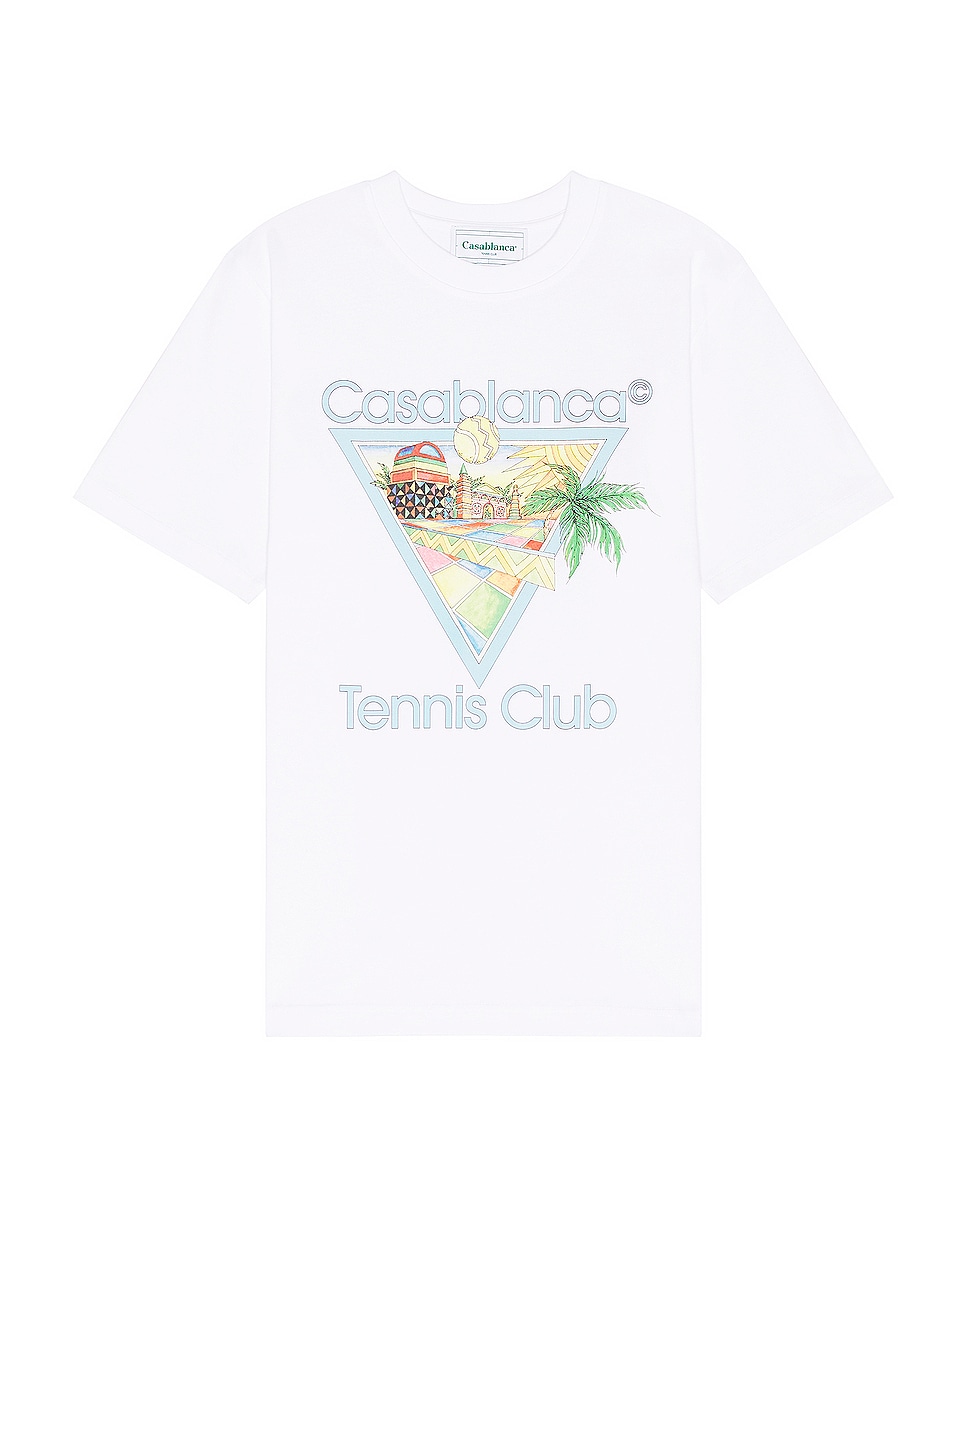 Casablanca Afro Cubism Tennis Club Printed T-shirt in White